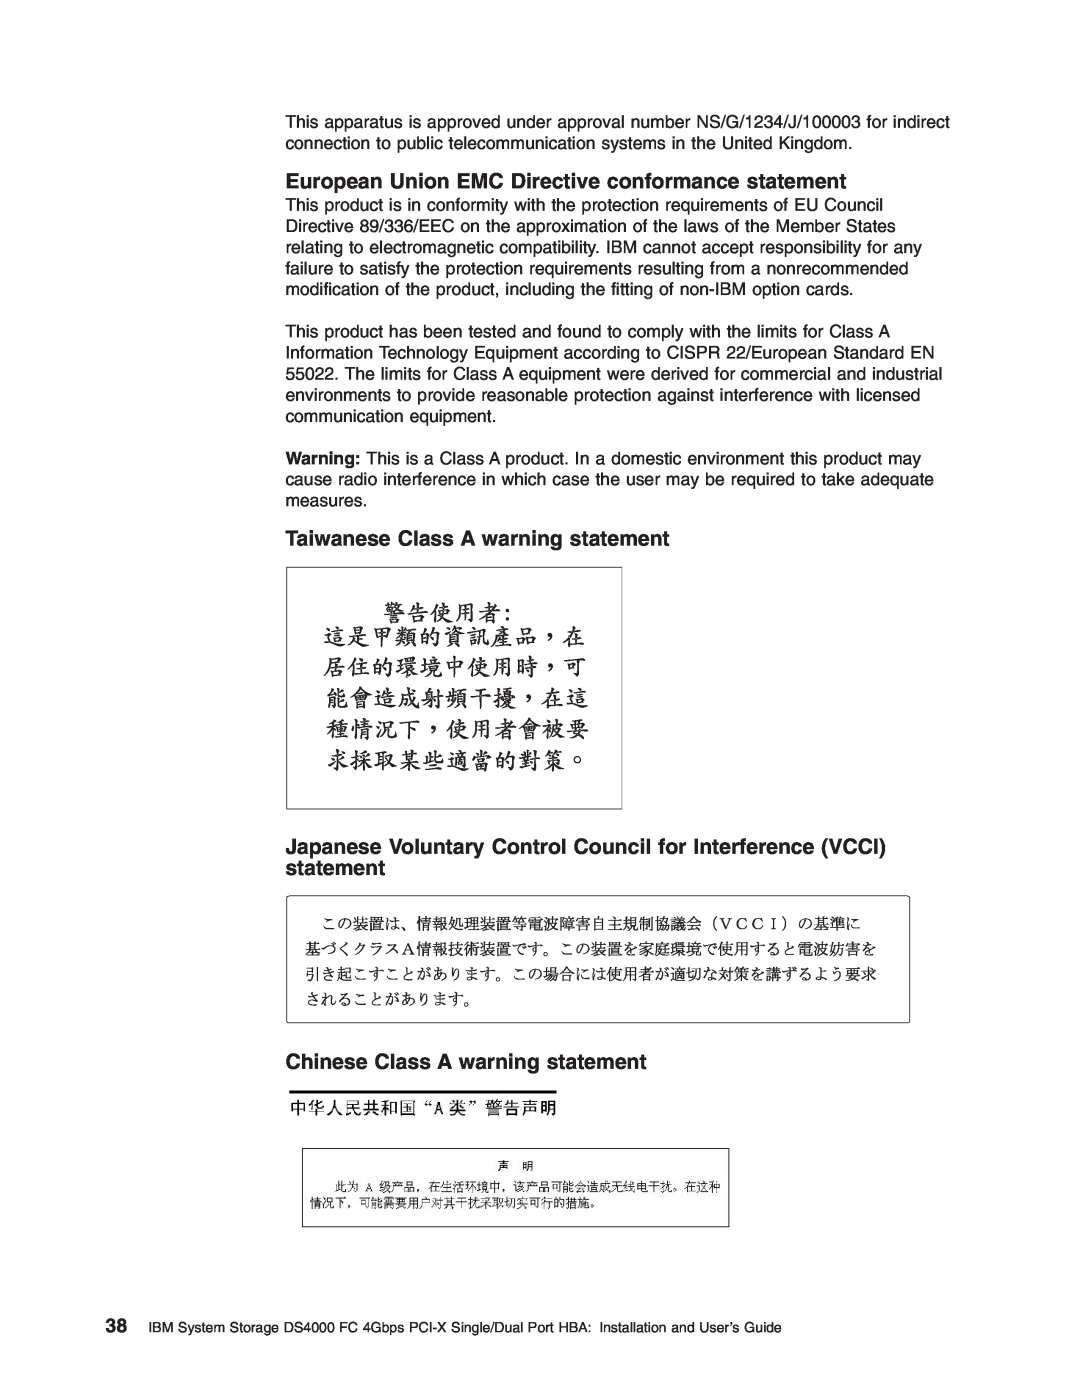 IBM DS4000 FC manual European Union EMC Directive conformance statement, Taiwanese Class A warning statement 